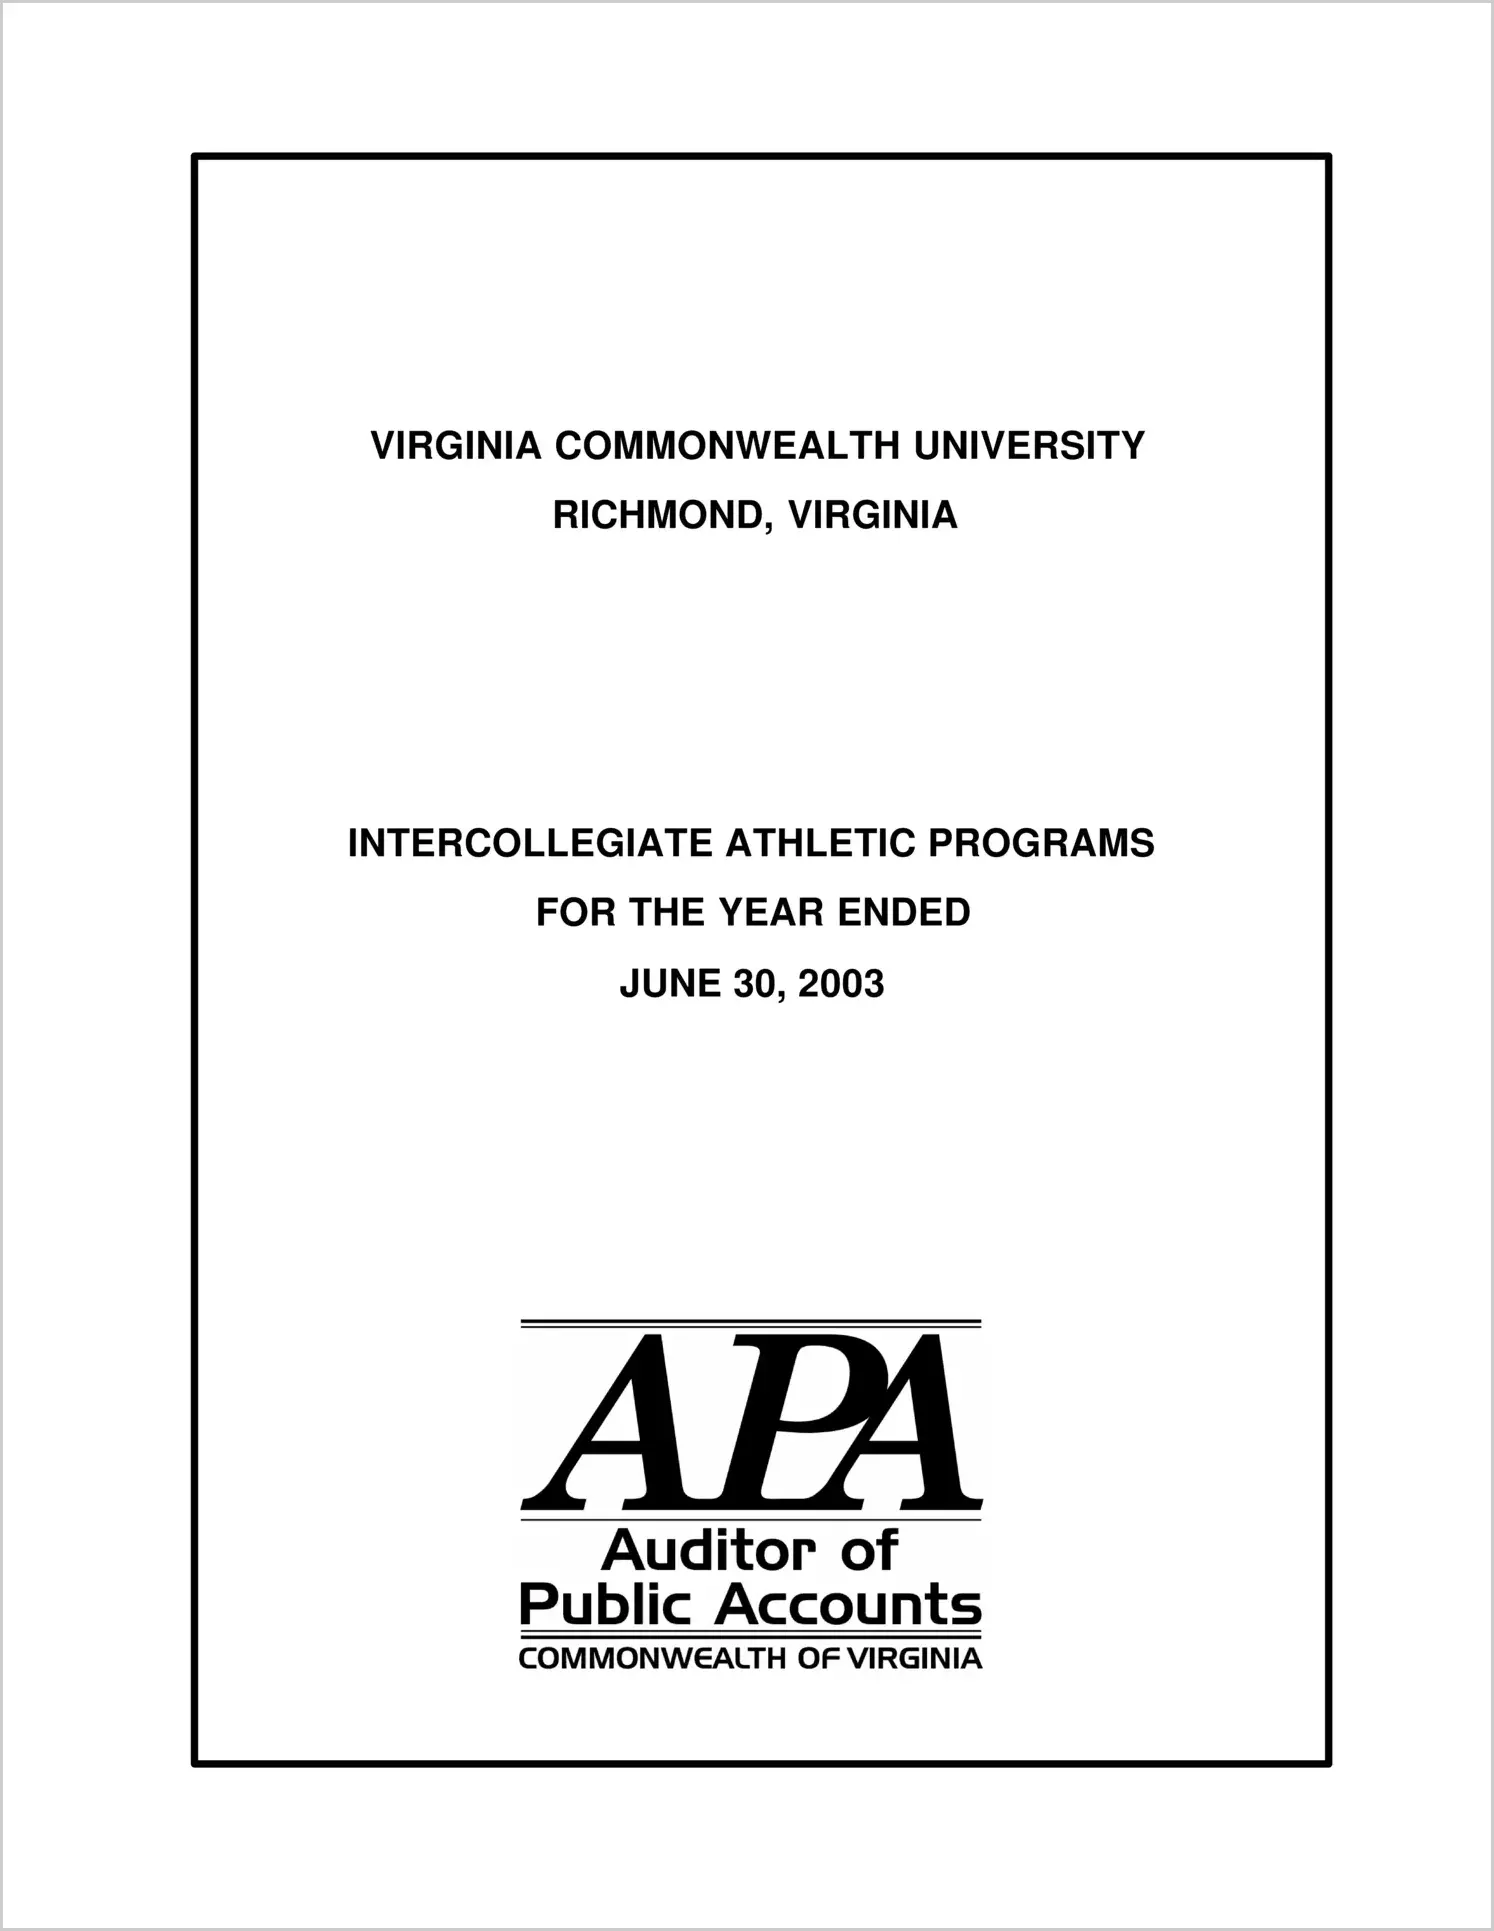 Virginia Commonwealth University Intercollegiate Athletics Programs for the year ended June 30, 2003